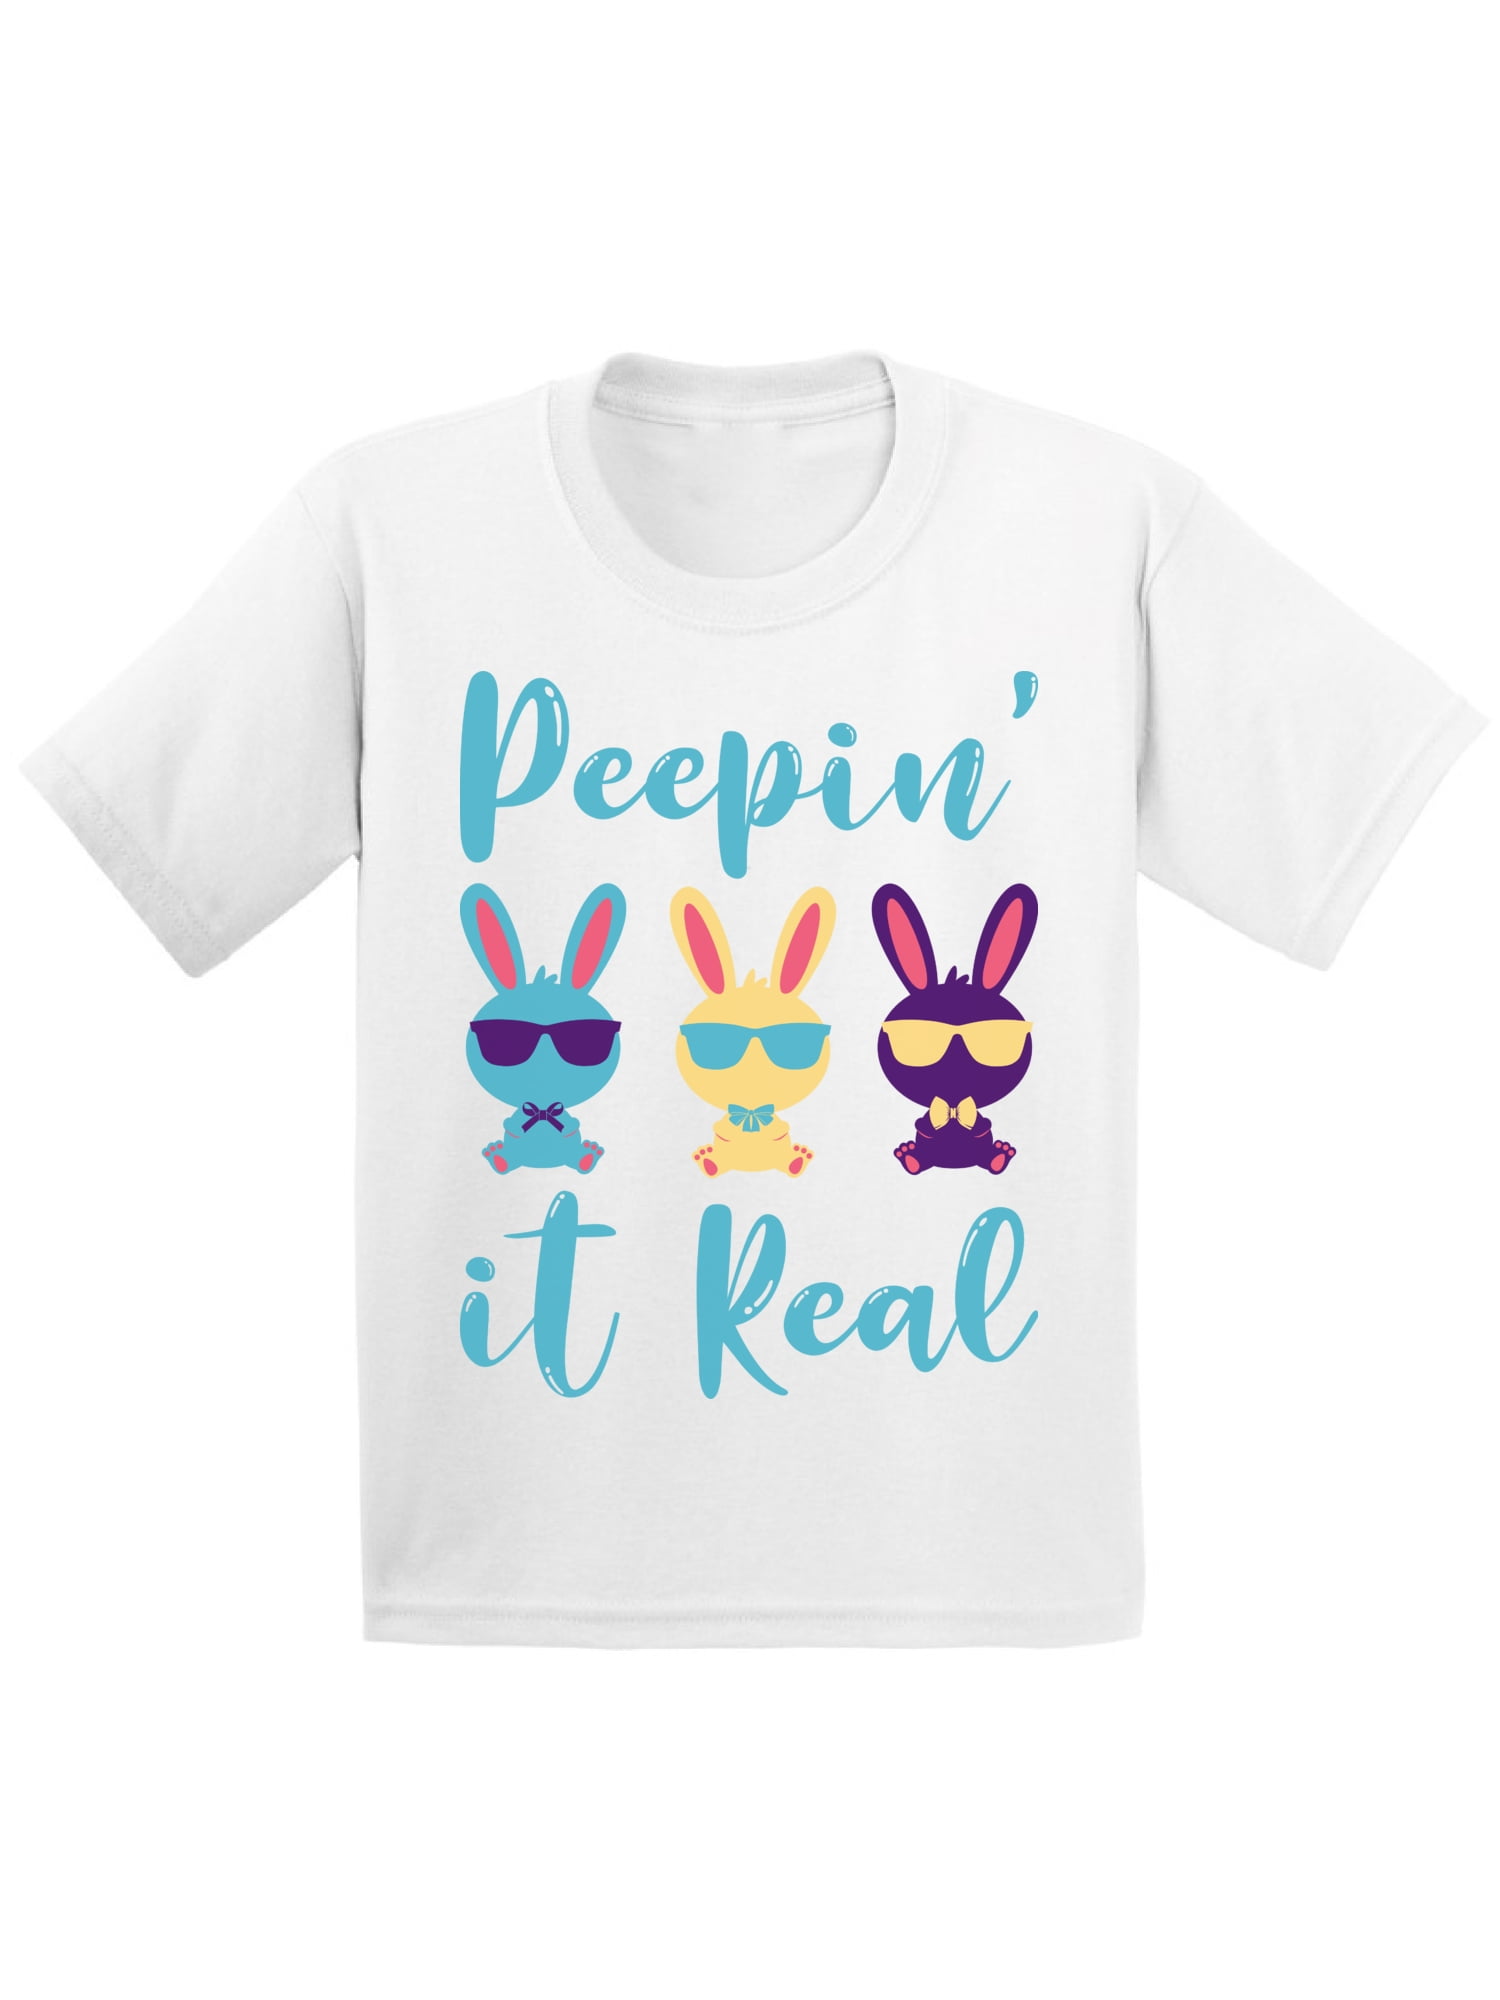 Boys Hip Hop Easter Bunny Shirt 2t 3t 4t 5 6 7 8 Toddler Kids Clothes 